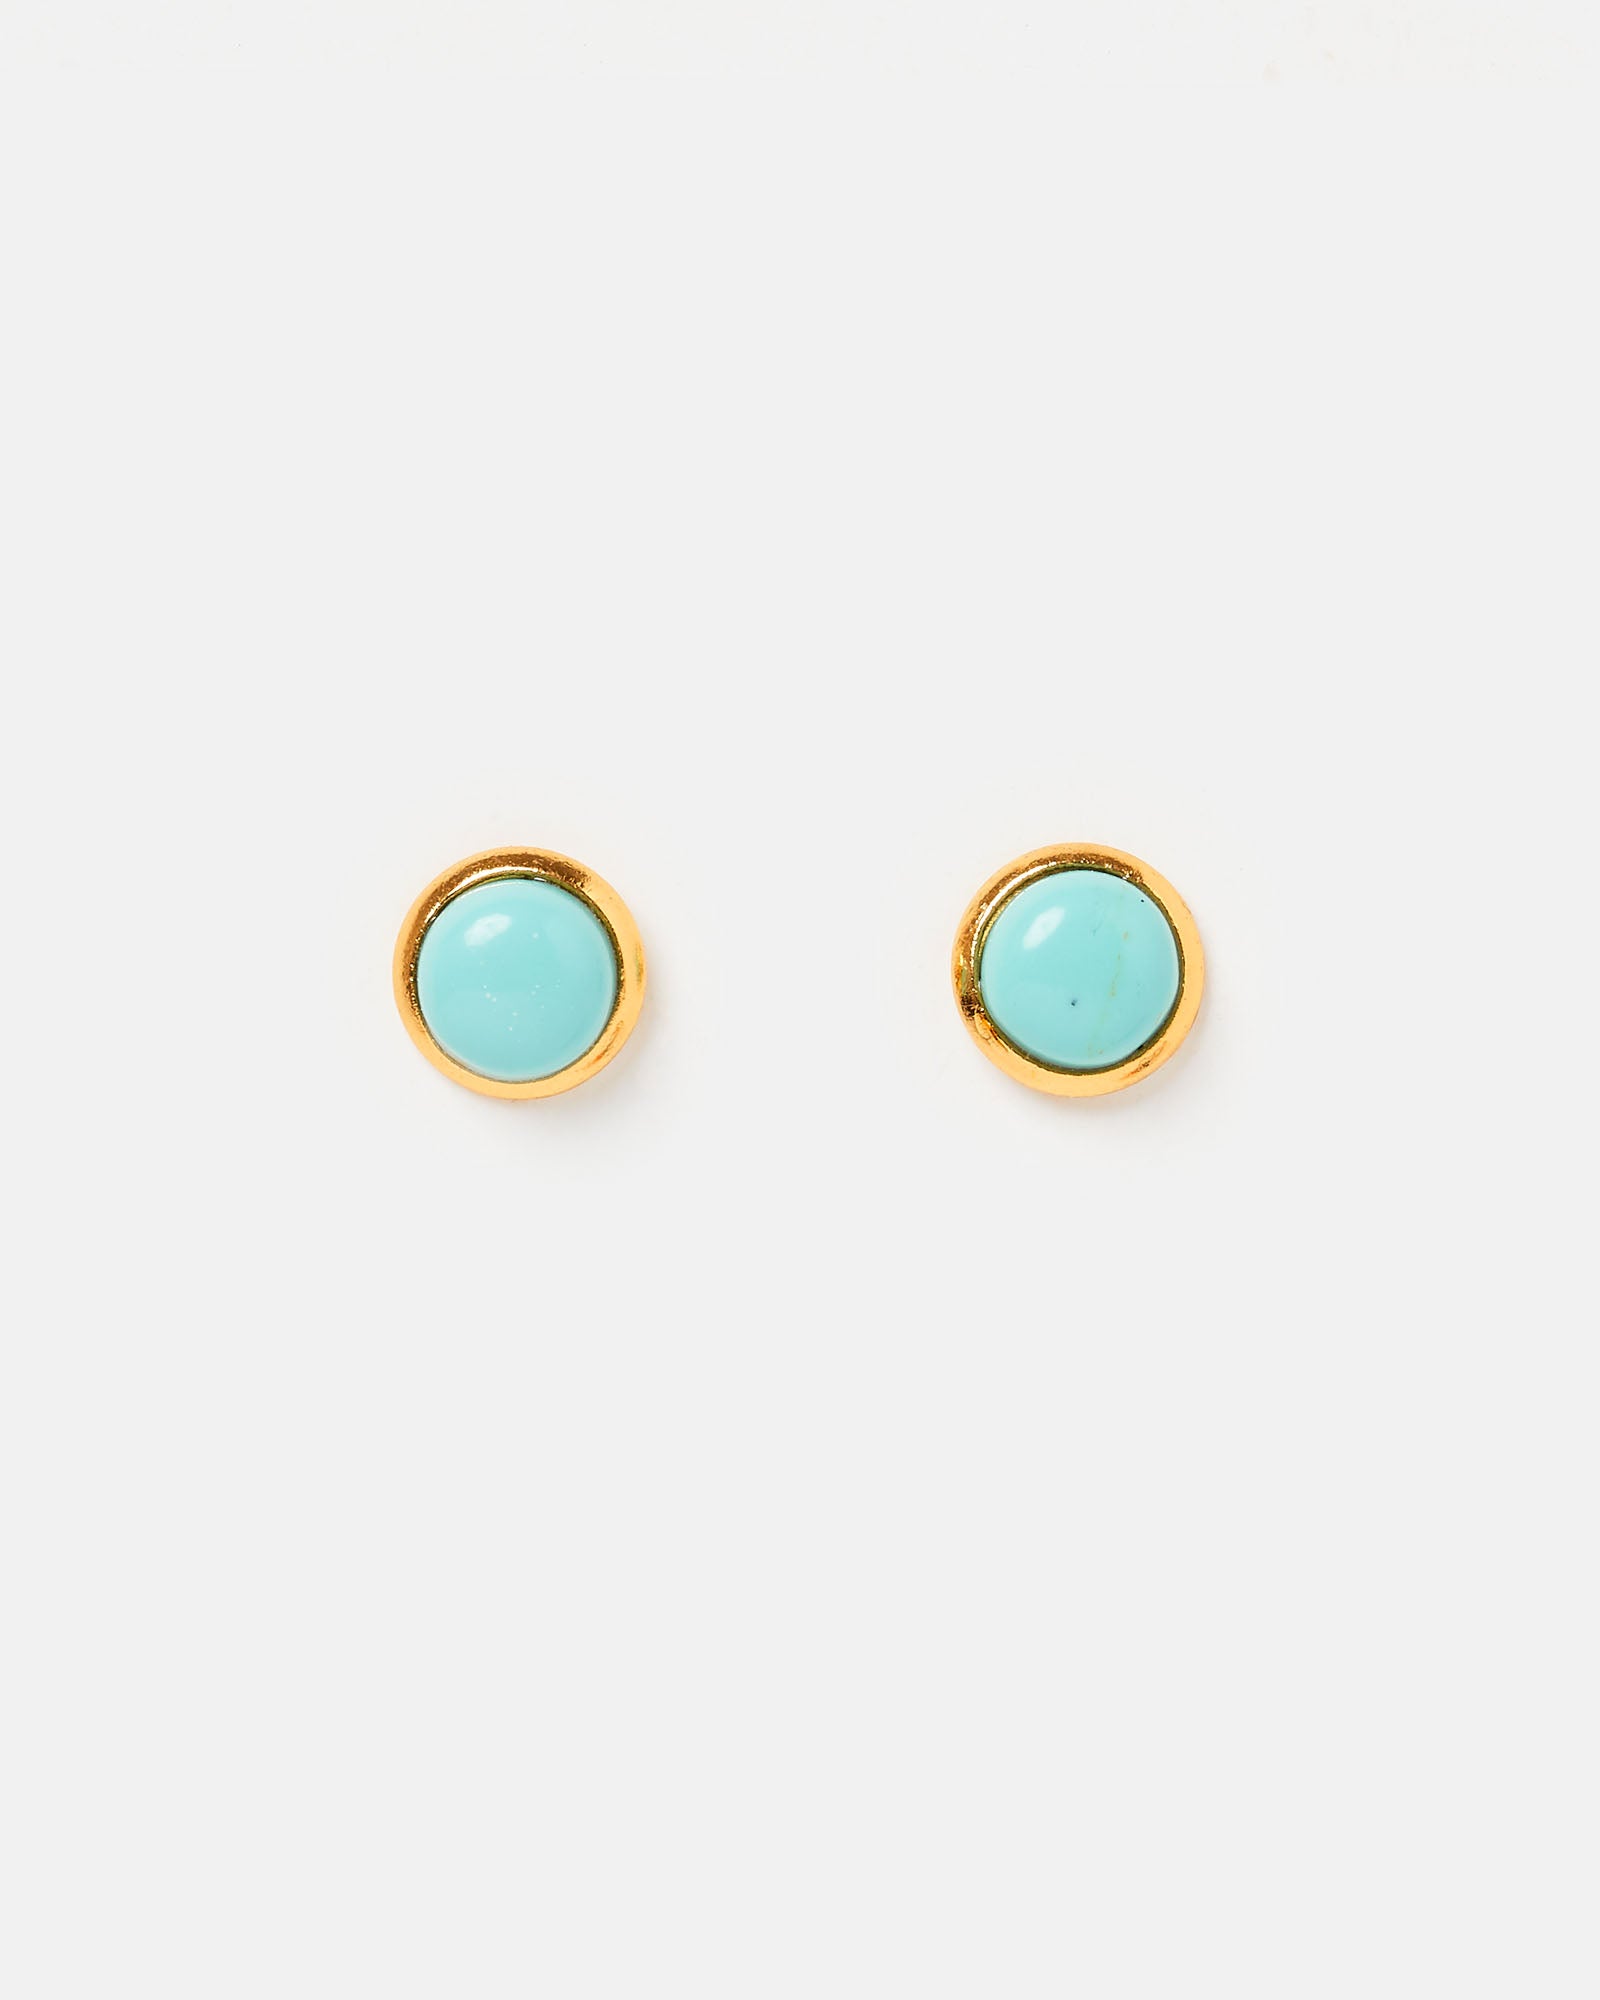 Miz Casa & Co Sunlit Stud Earrings Turquoise Gold - Shop Online ...